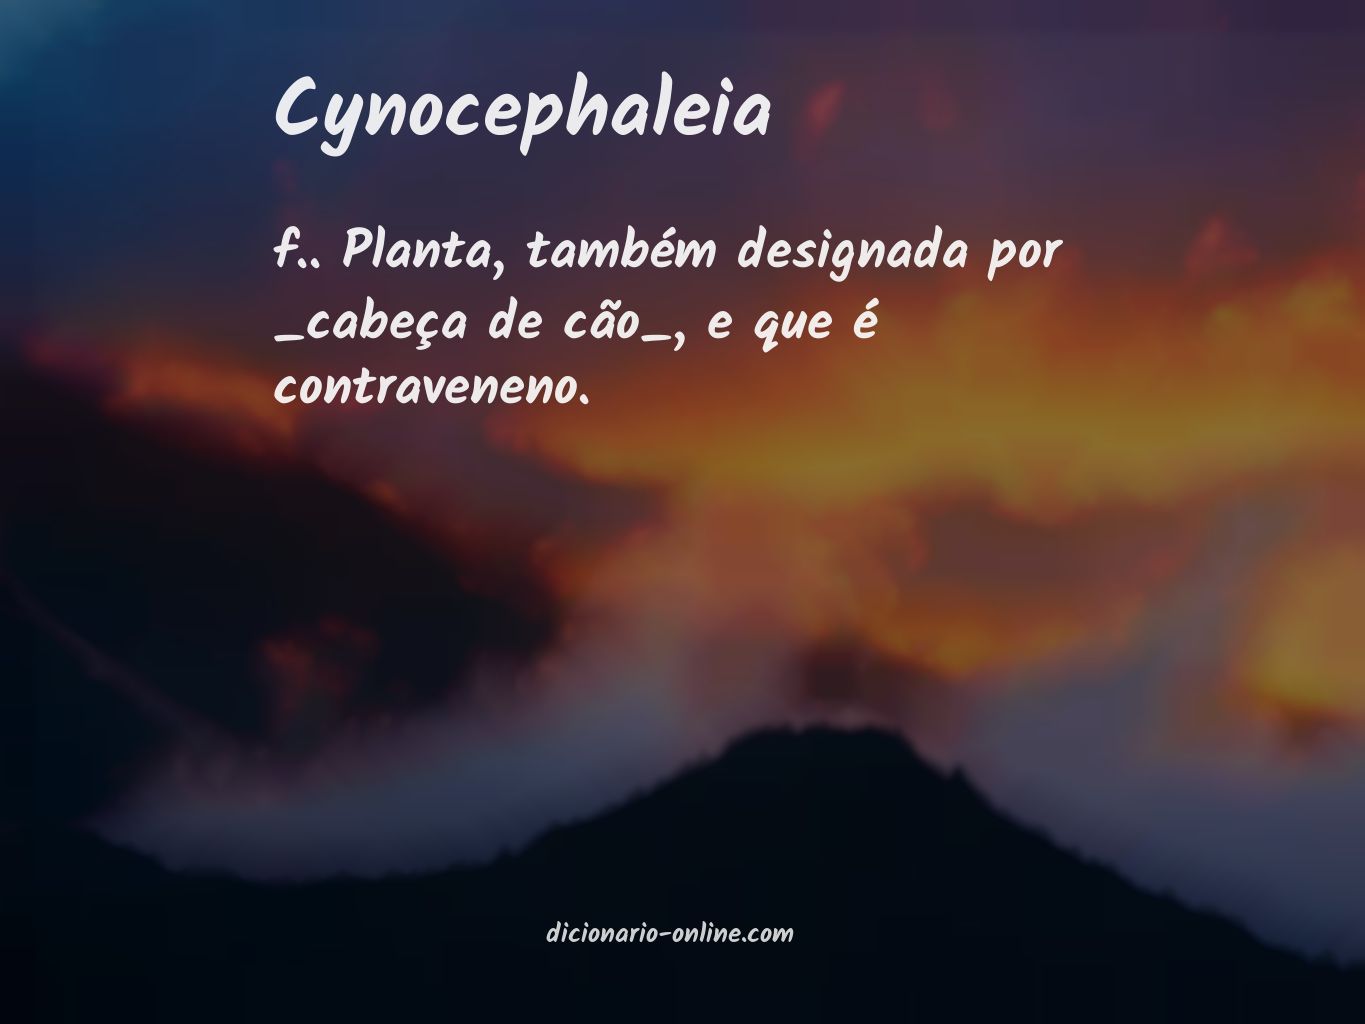 Significado de cynocephaleia